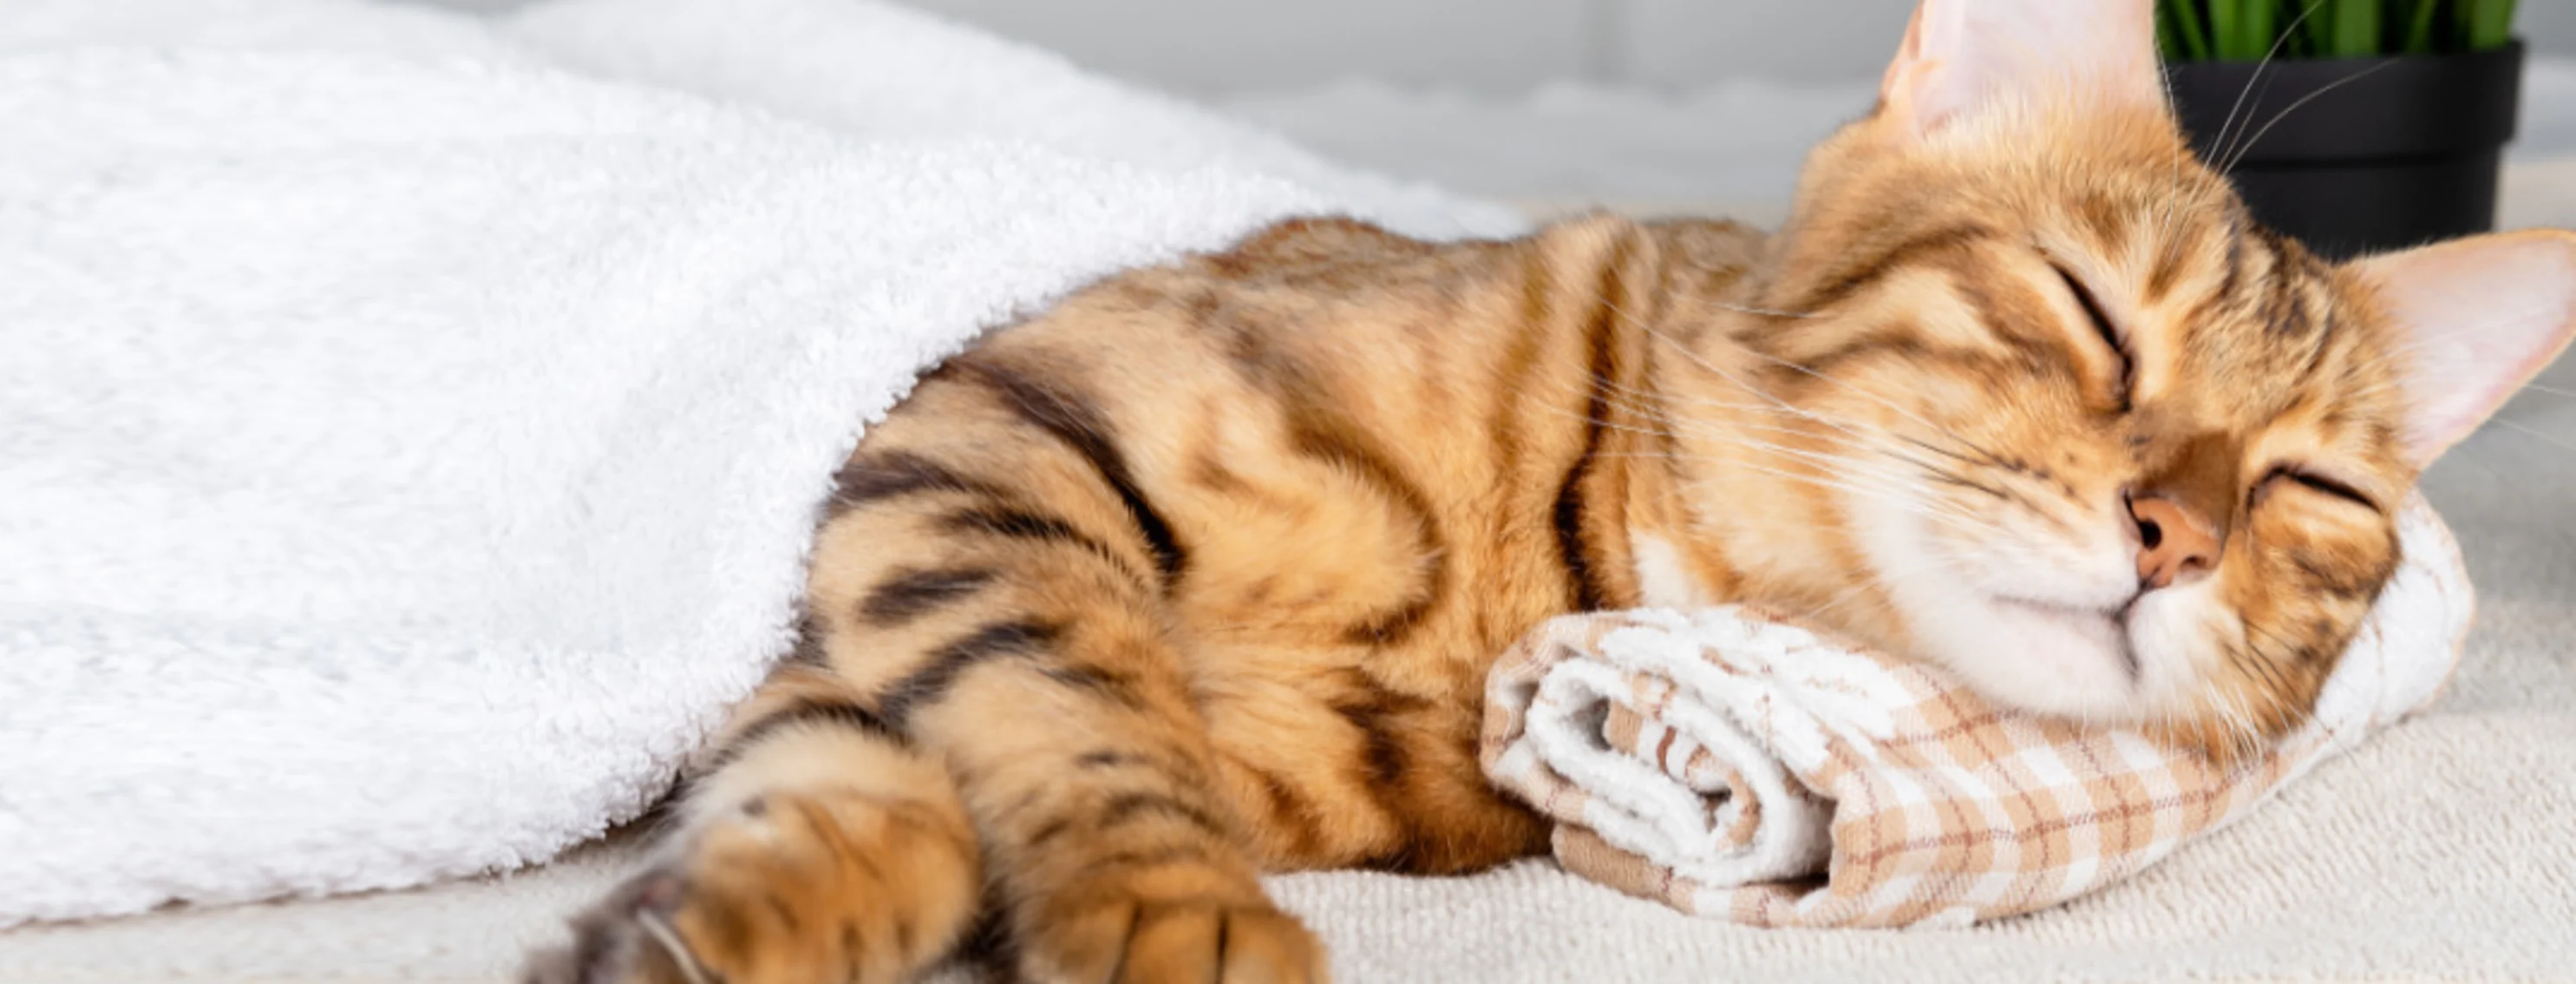 Orange Cat Sleeping with Towels